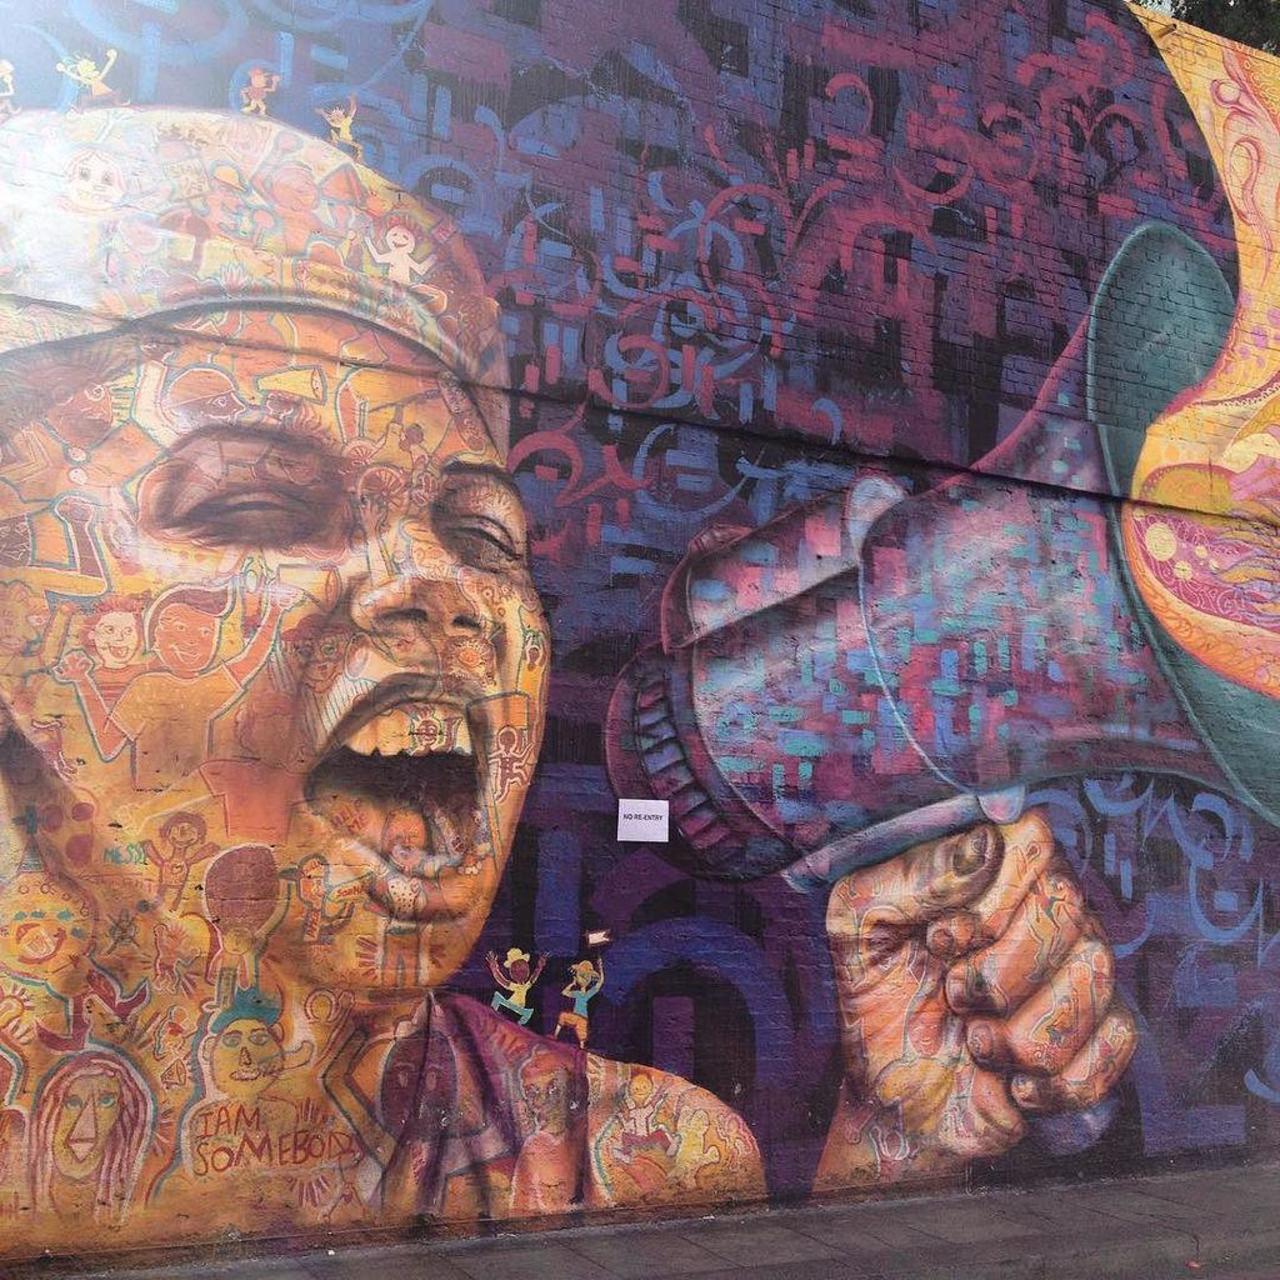 #streetart #graffiti #streetartlondon #london #thisislondon by isadarko http://t.co/5aXdckS0Zr